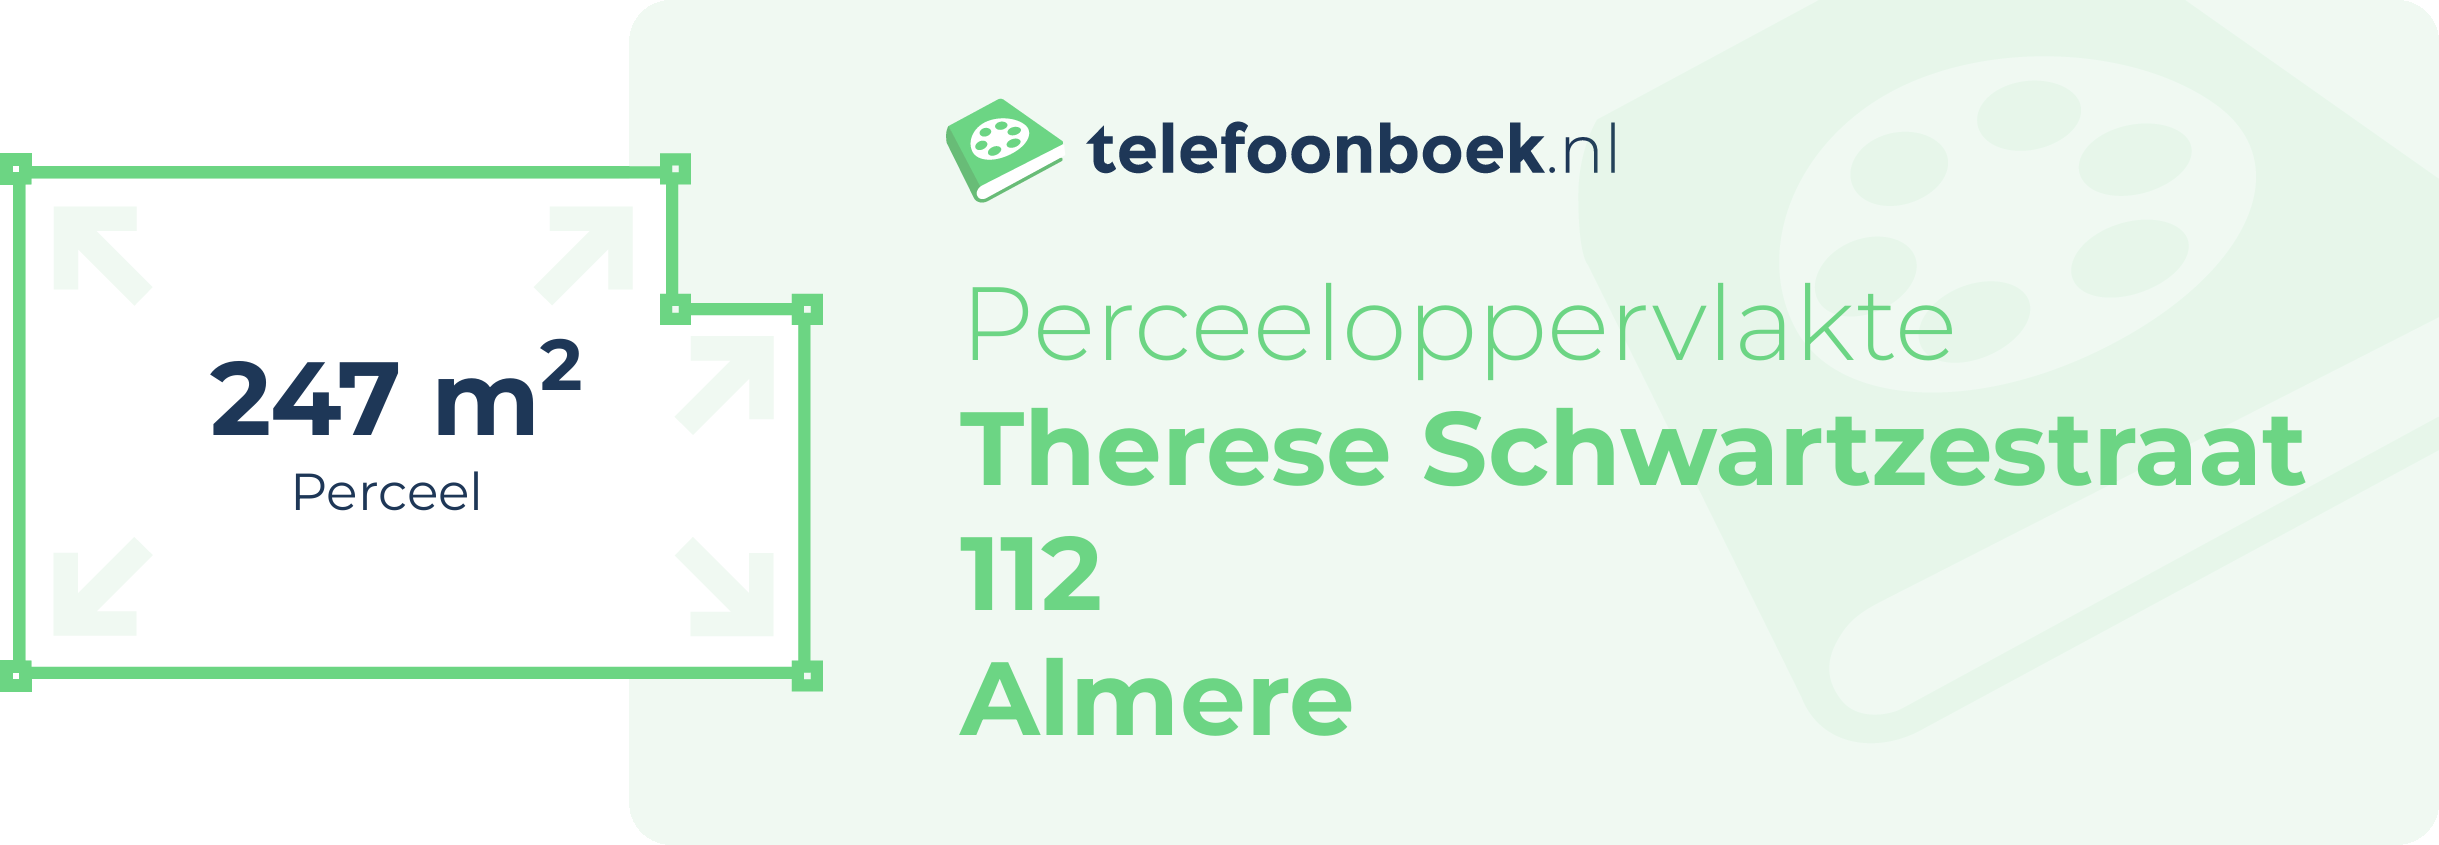 Perceeloppervlakte Therese Schwartzestraat 112 Almere